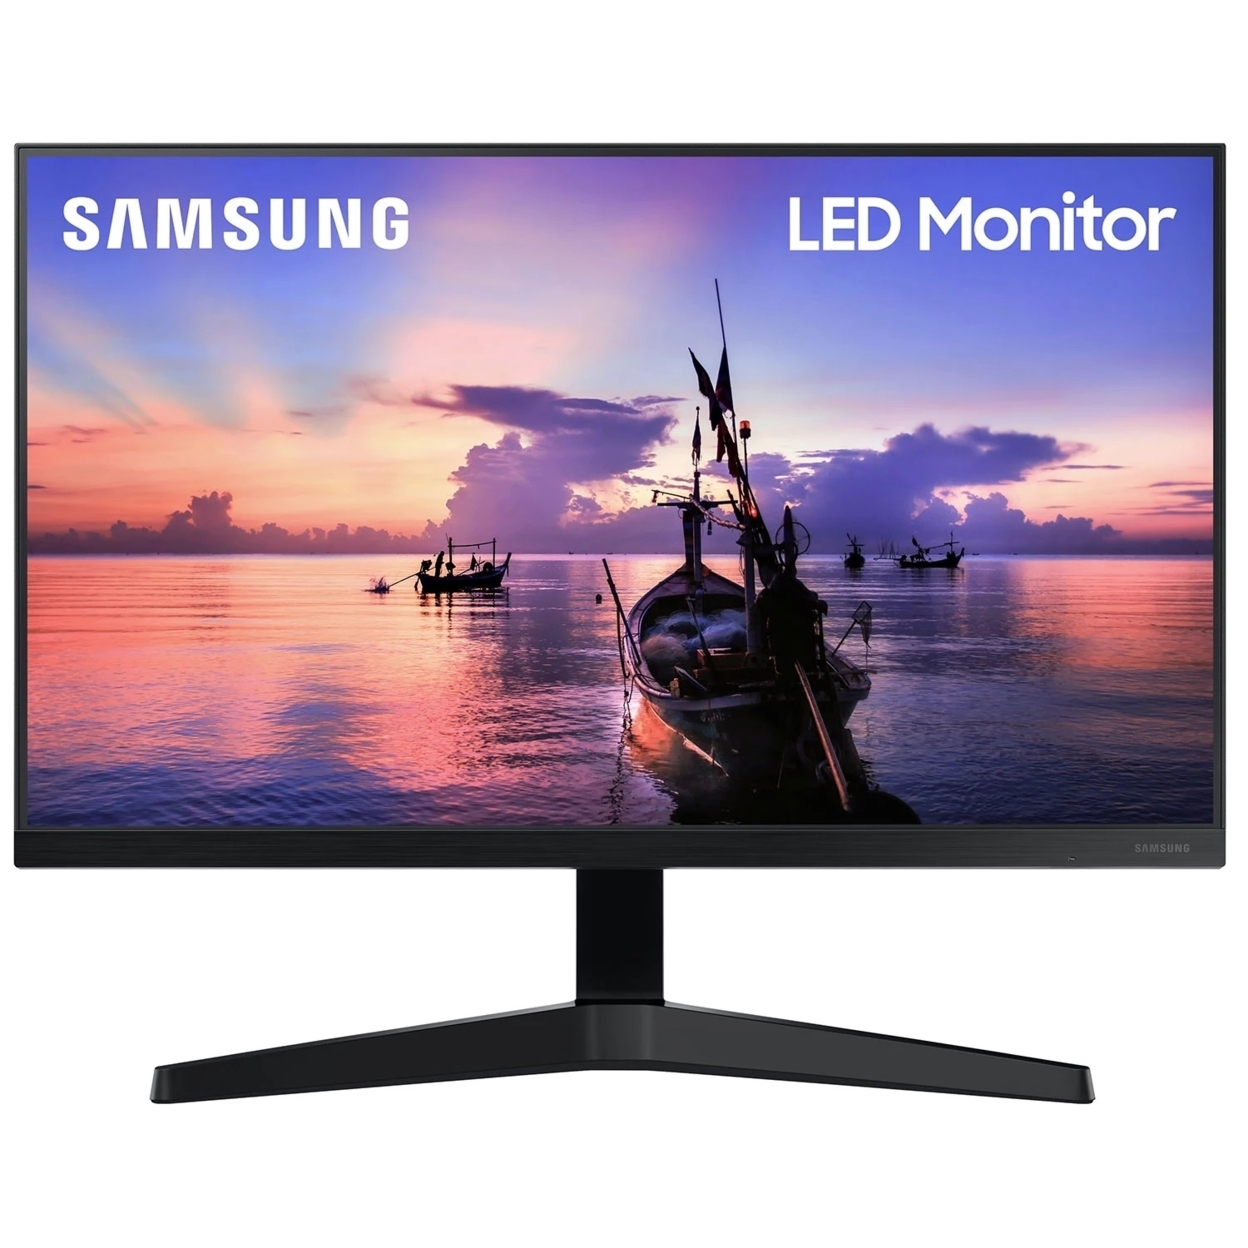 Samsung 27 LED Full HD Monitor With Borderless Design